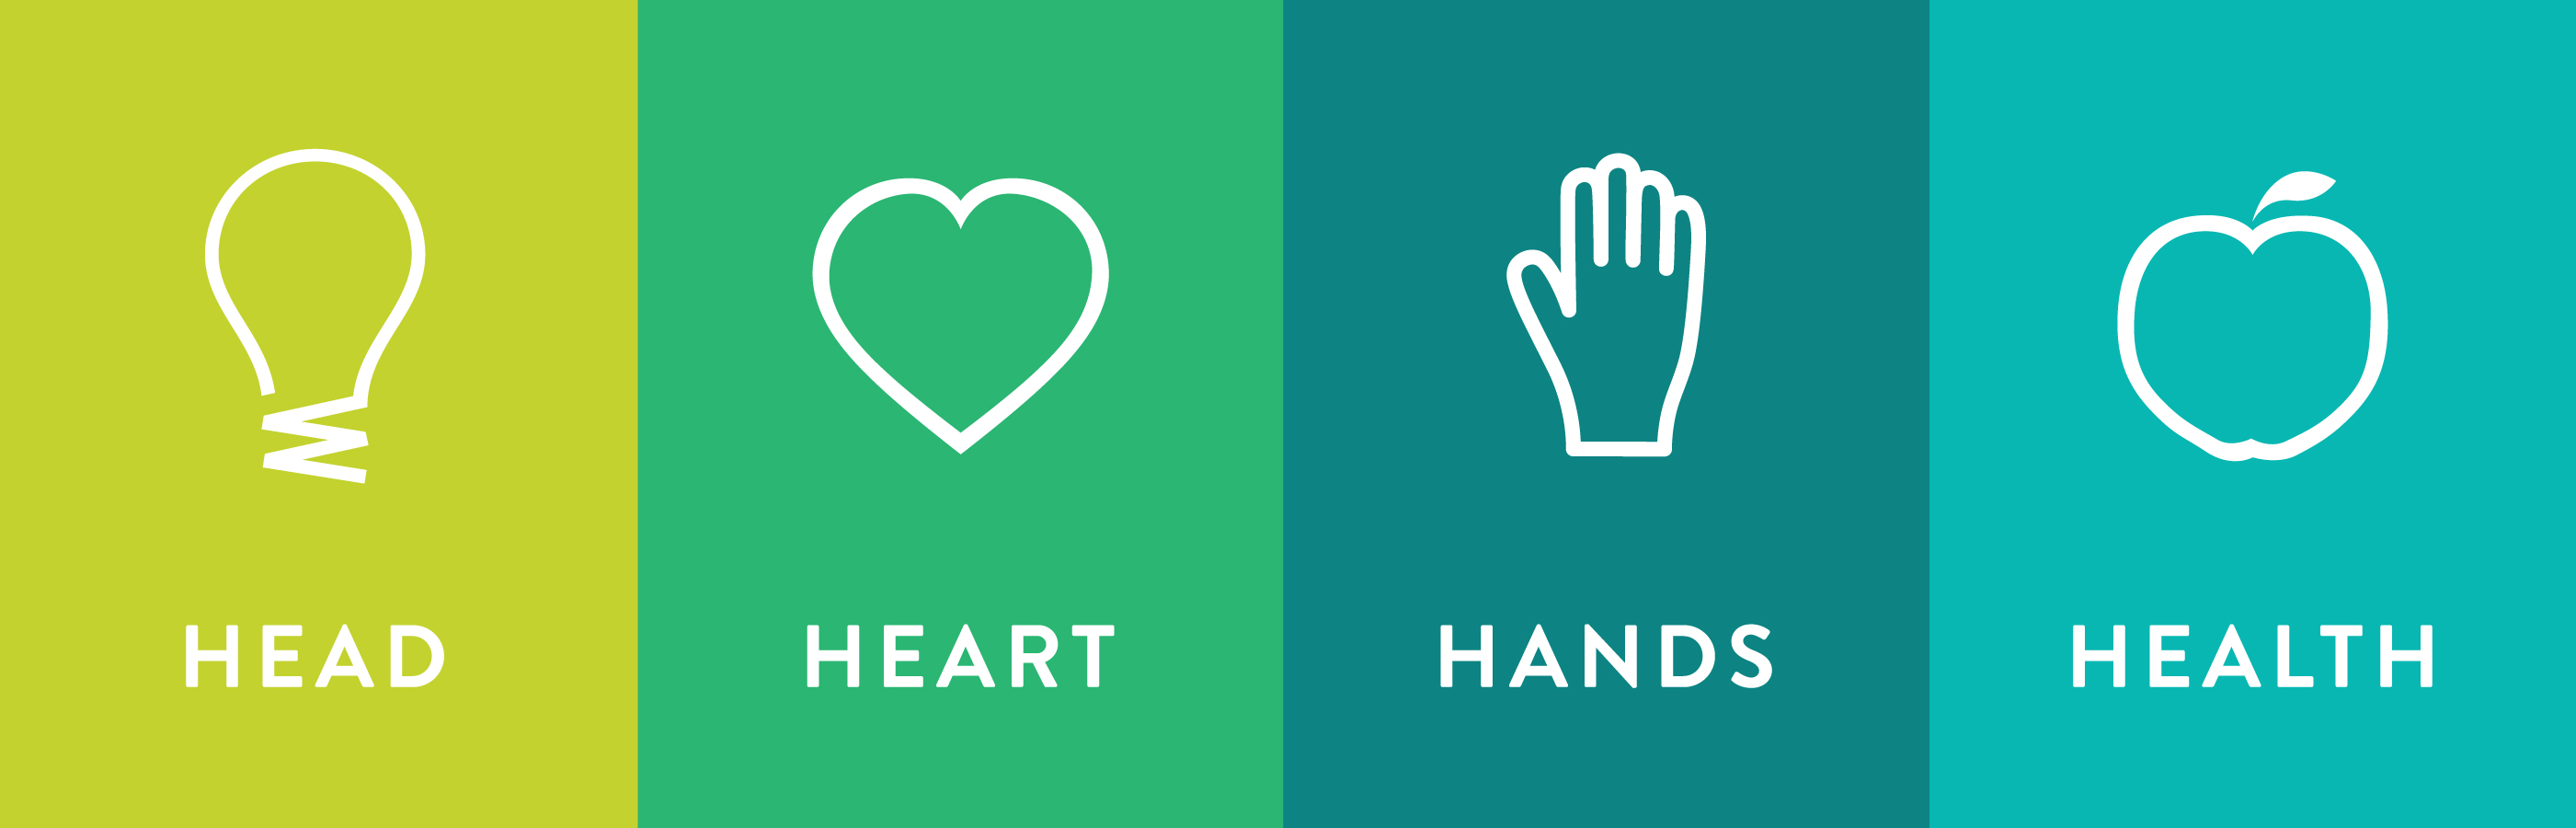 Head, Heart, Hands, Health Image